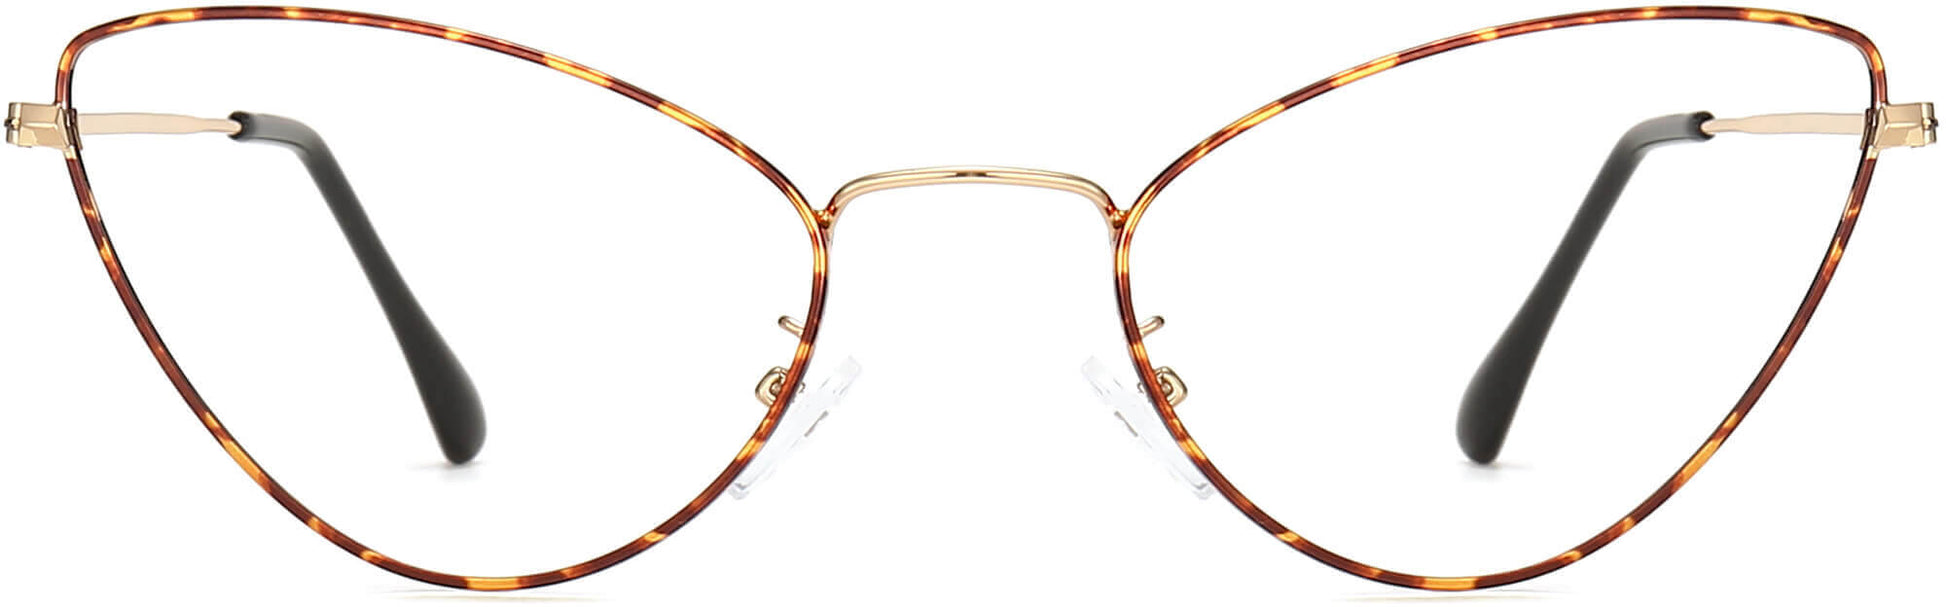 Gemma Cateye Tortoise Eyeglasses from ANRRI, front view